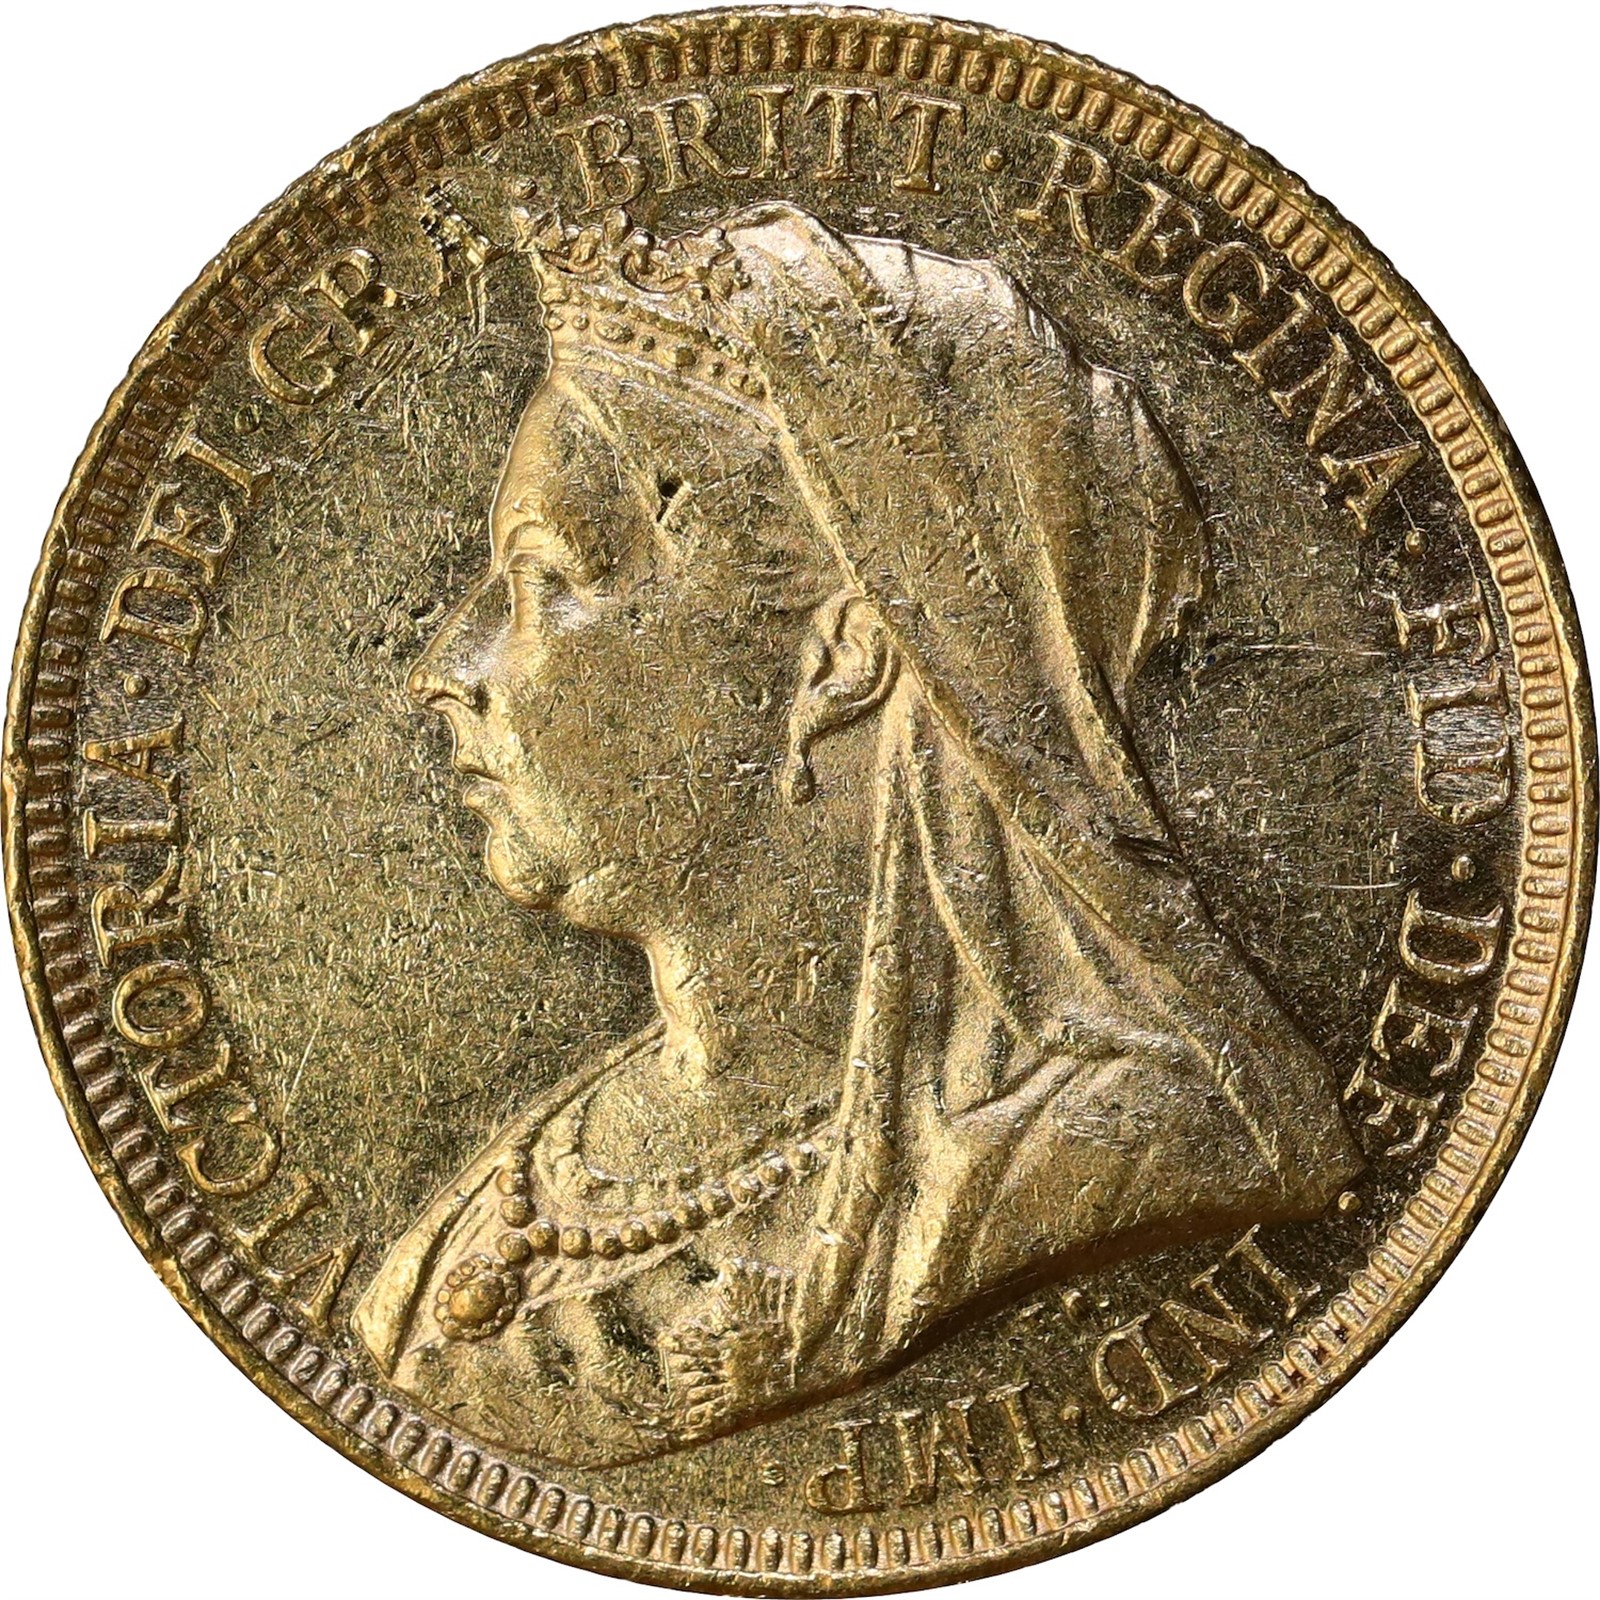 GREAT BRITAIN. Victoria. Sovereign 1893 UNC